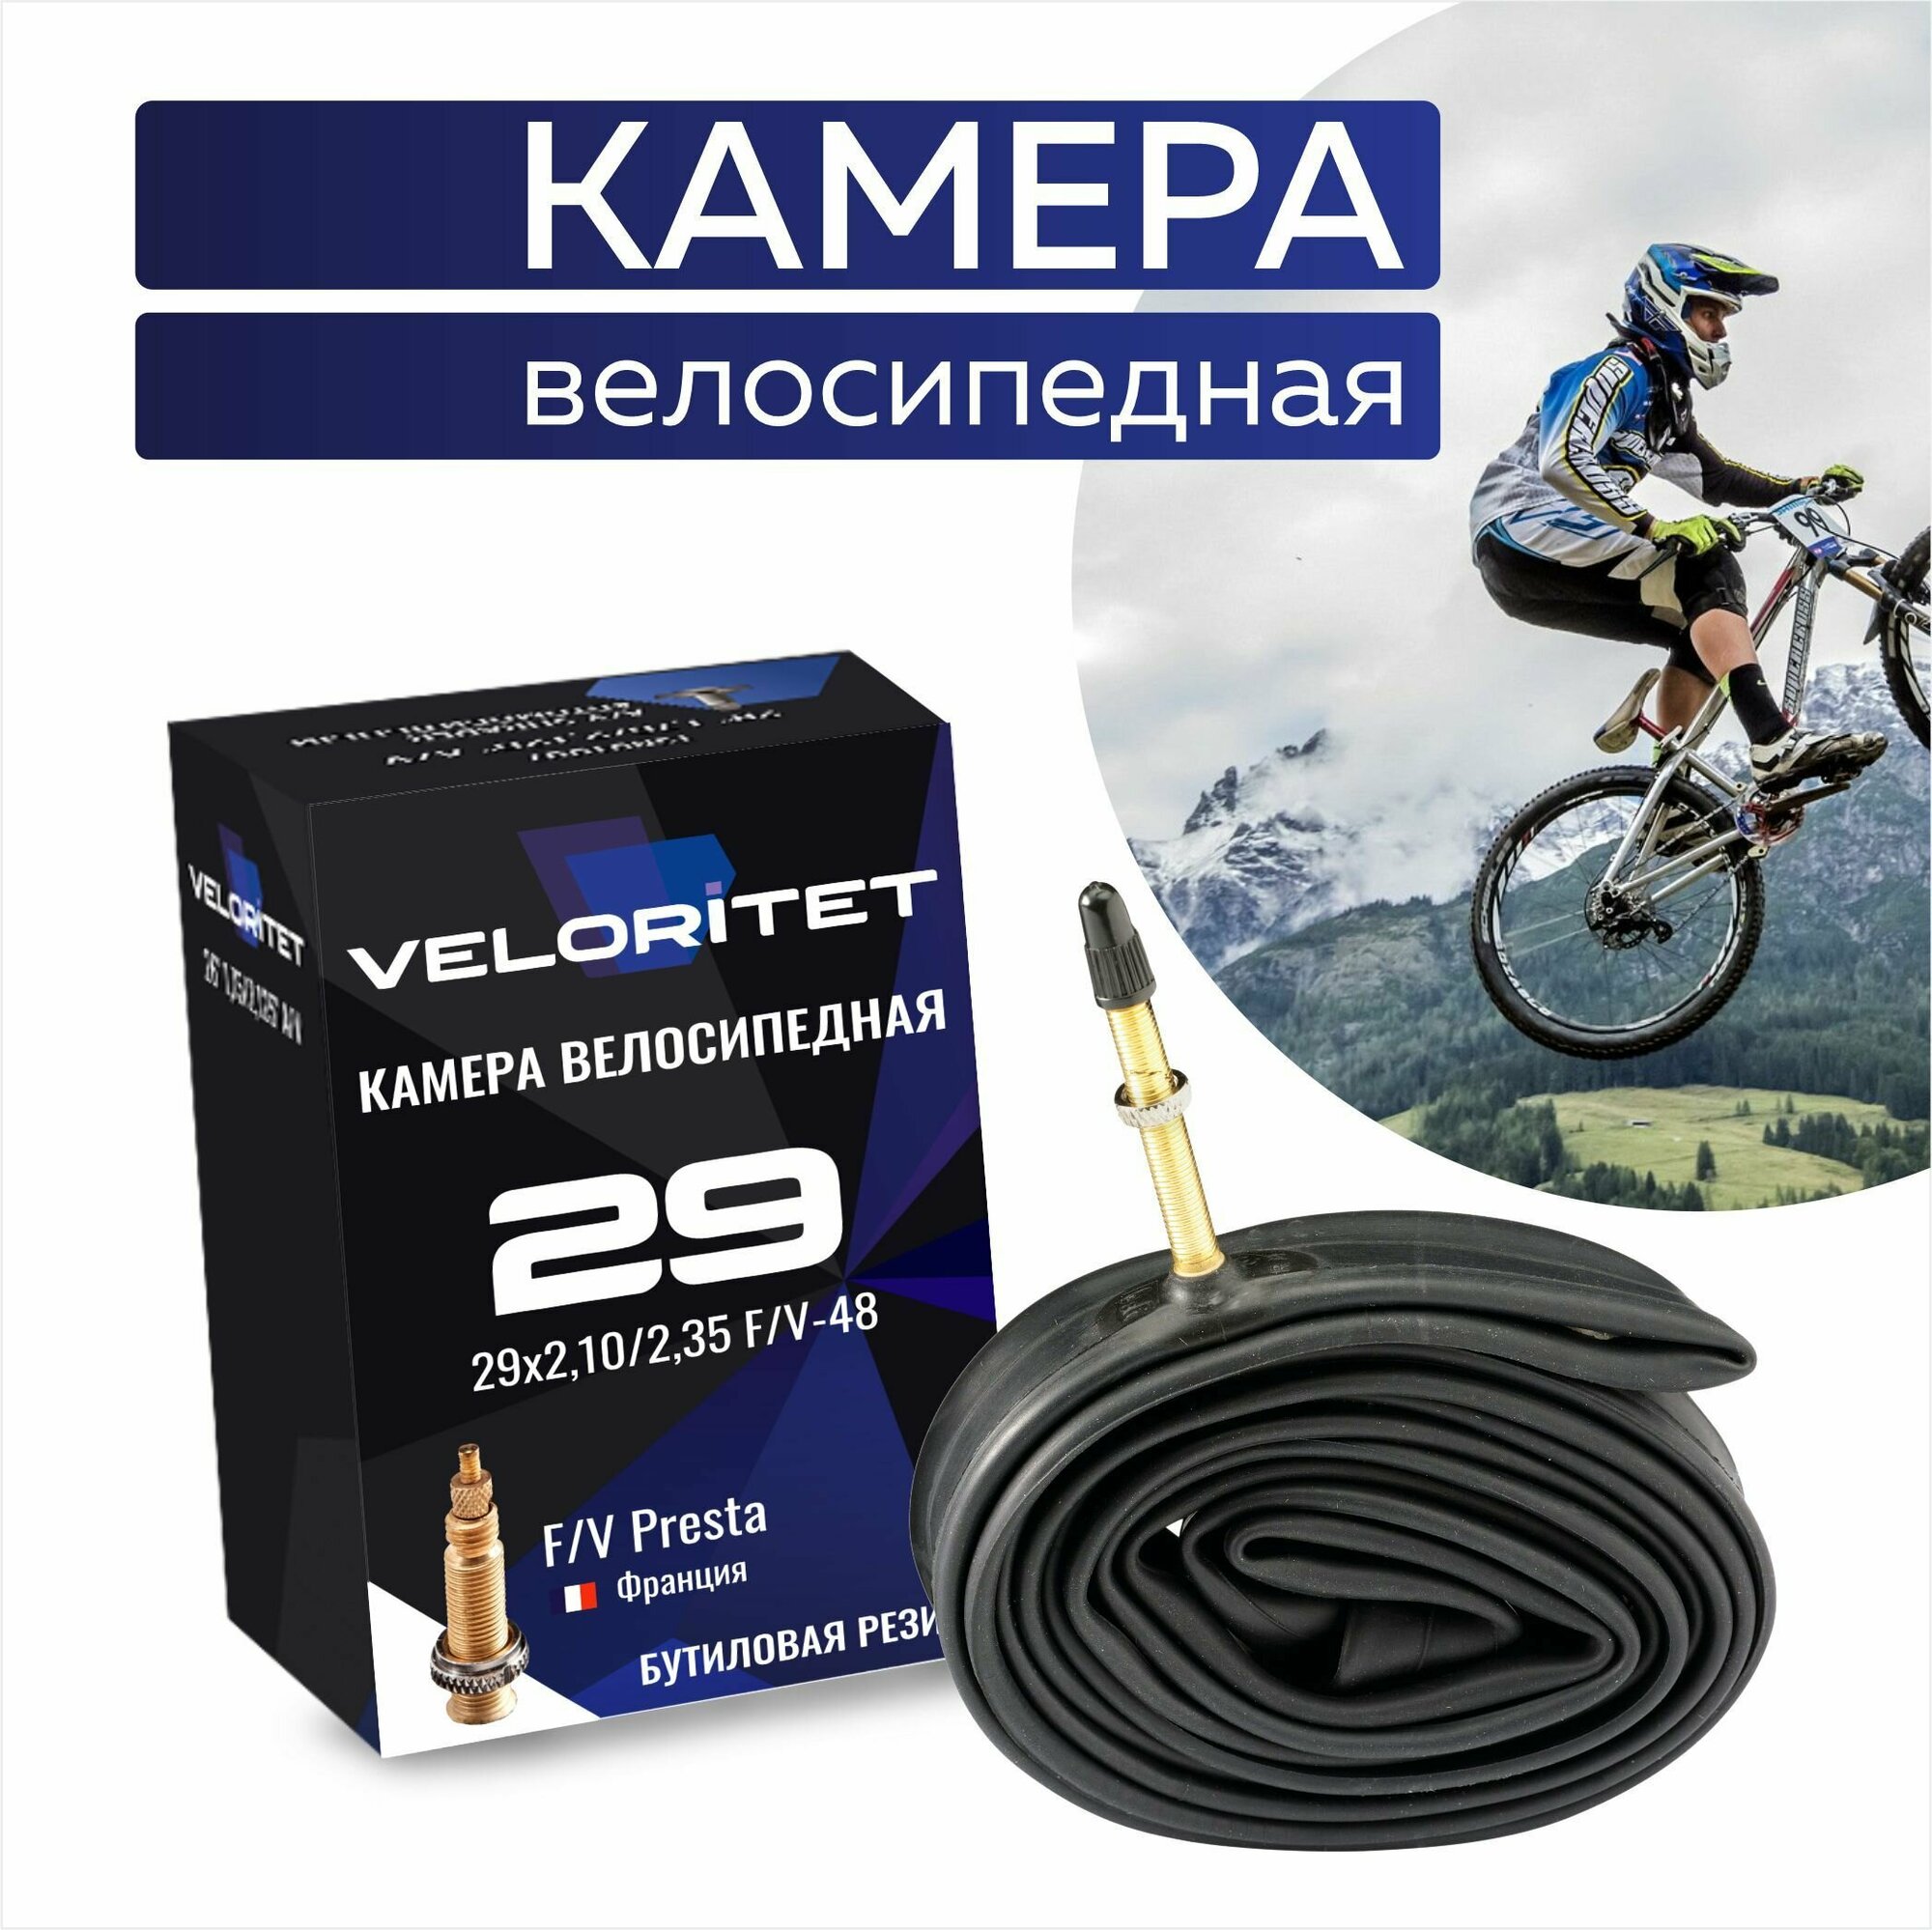 Камера для велосипеда 29 Veloritet 29x2,10/2,35 F/V-48